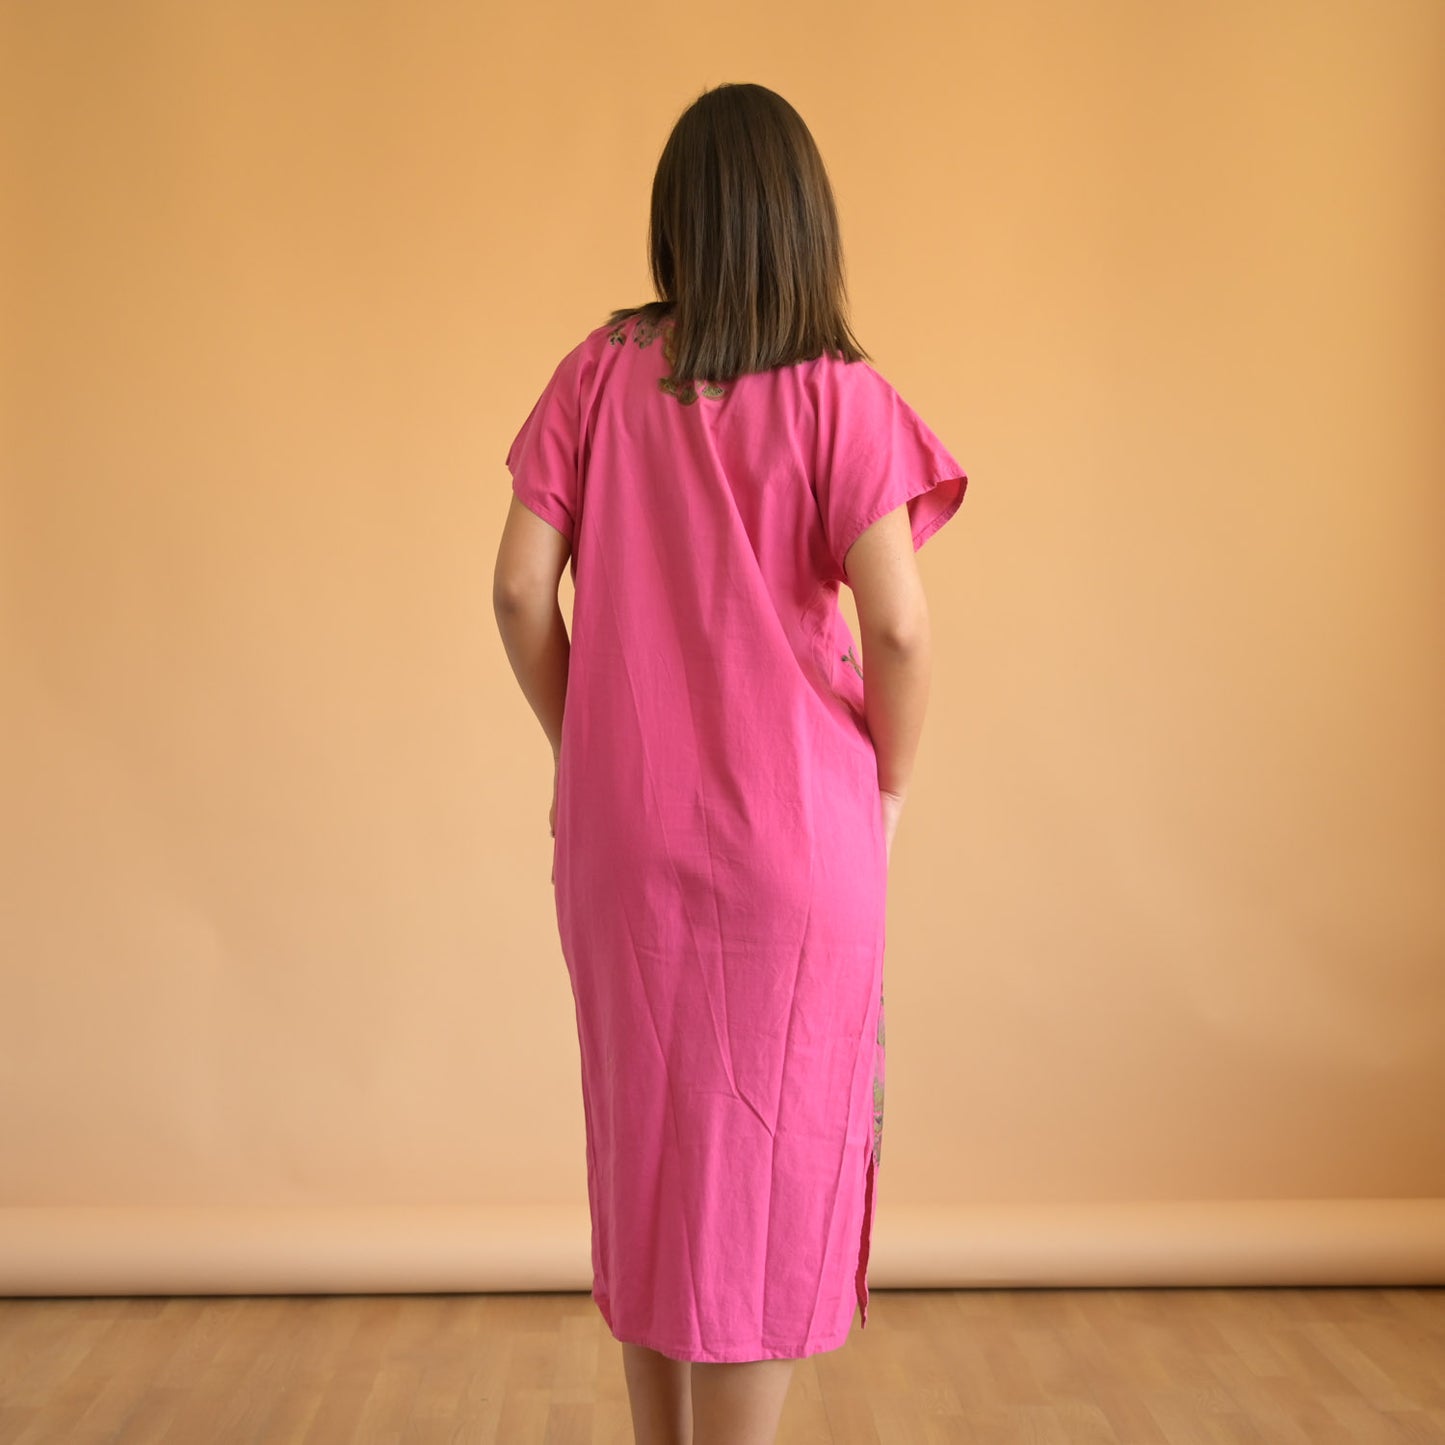 VIN-DR-16842 Vintage φόρεμα ethnic style ροζ-χρυσό M-L